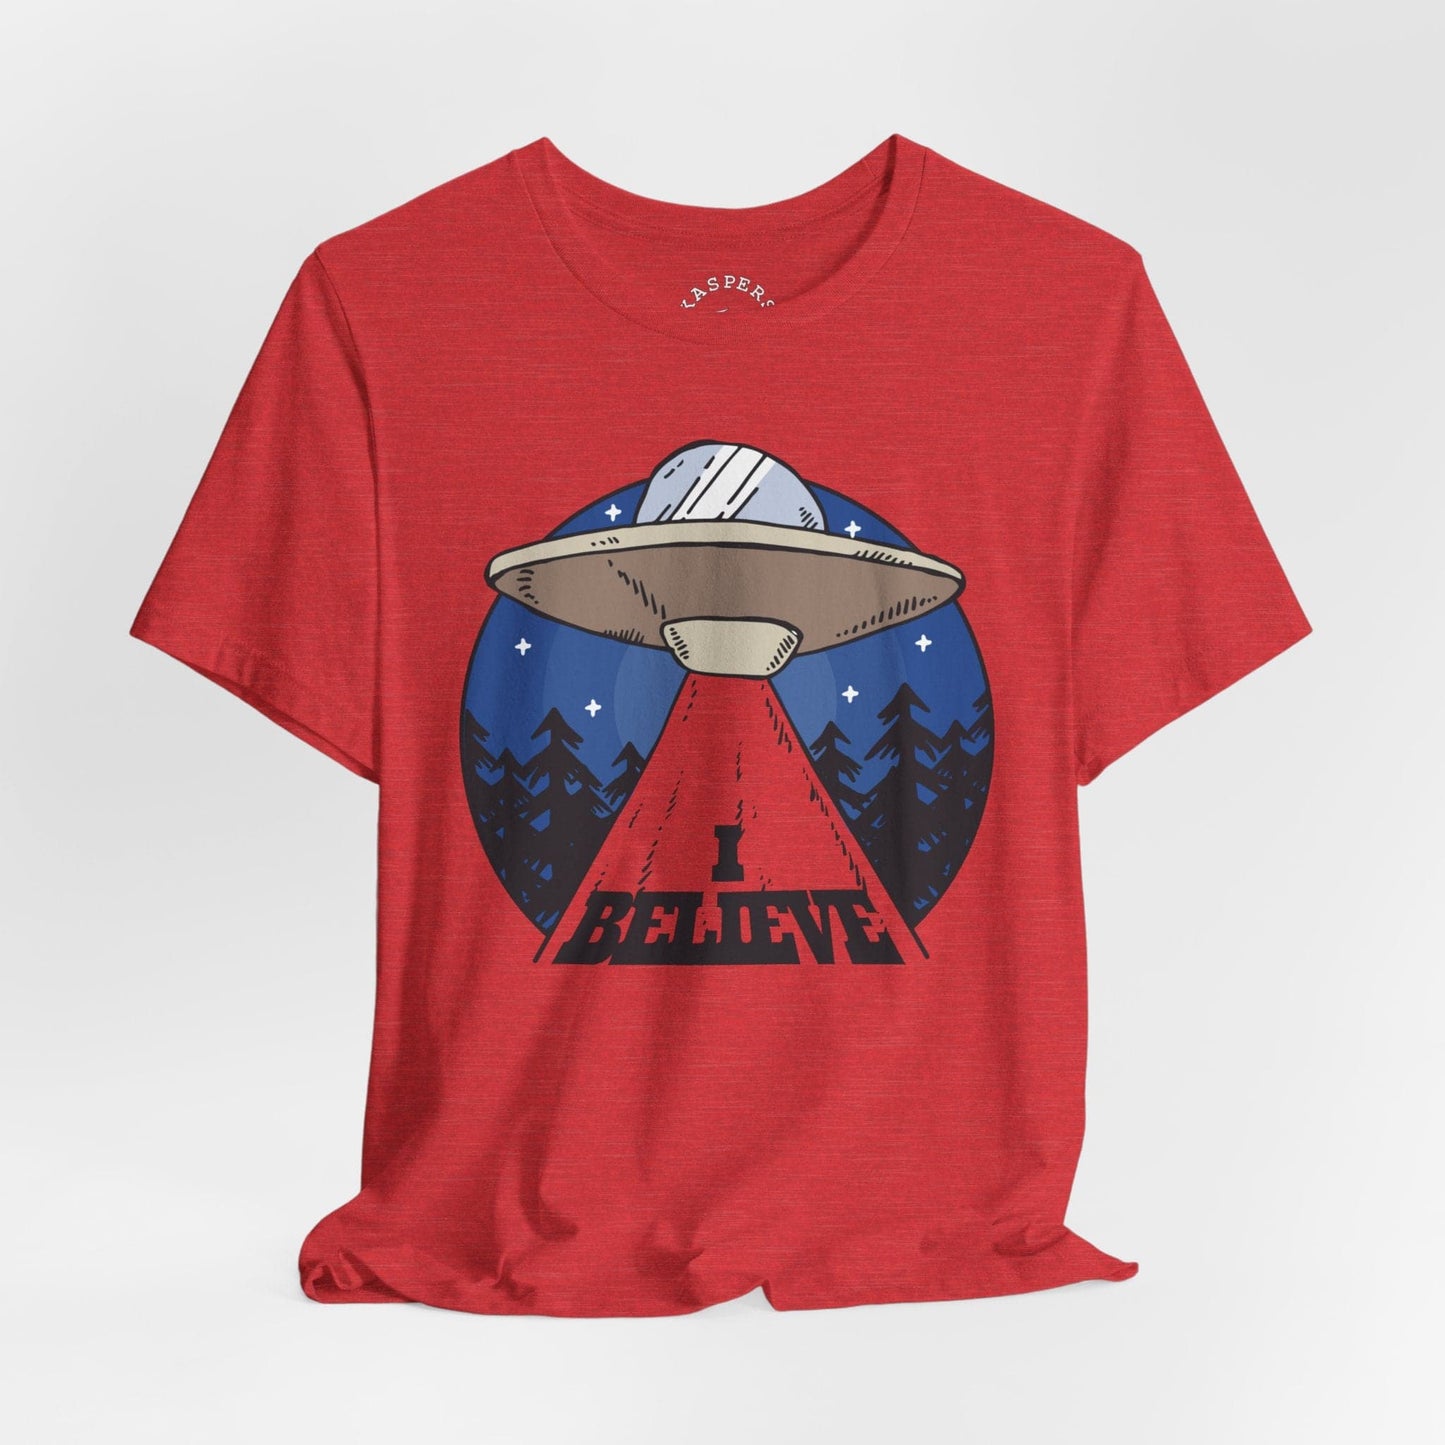 I Believe T-Shirt